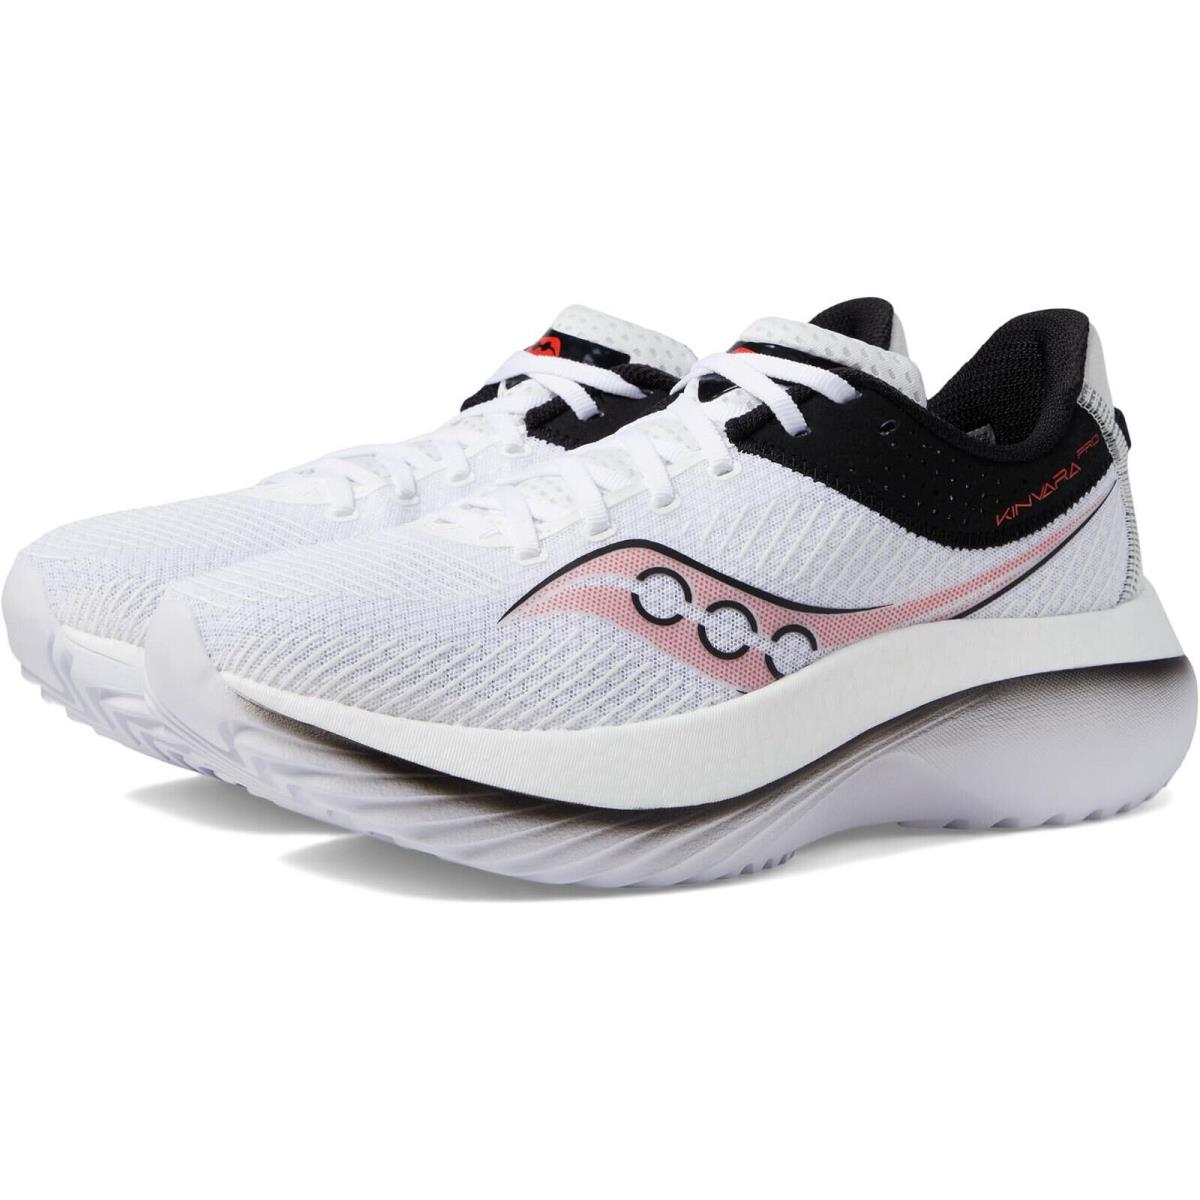 Saucony Kinvara Pro Running Shoes Men`s Size 12.5 Black/infrared S20847-30 - Black/Infrared